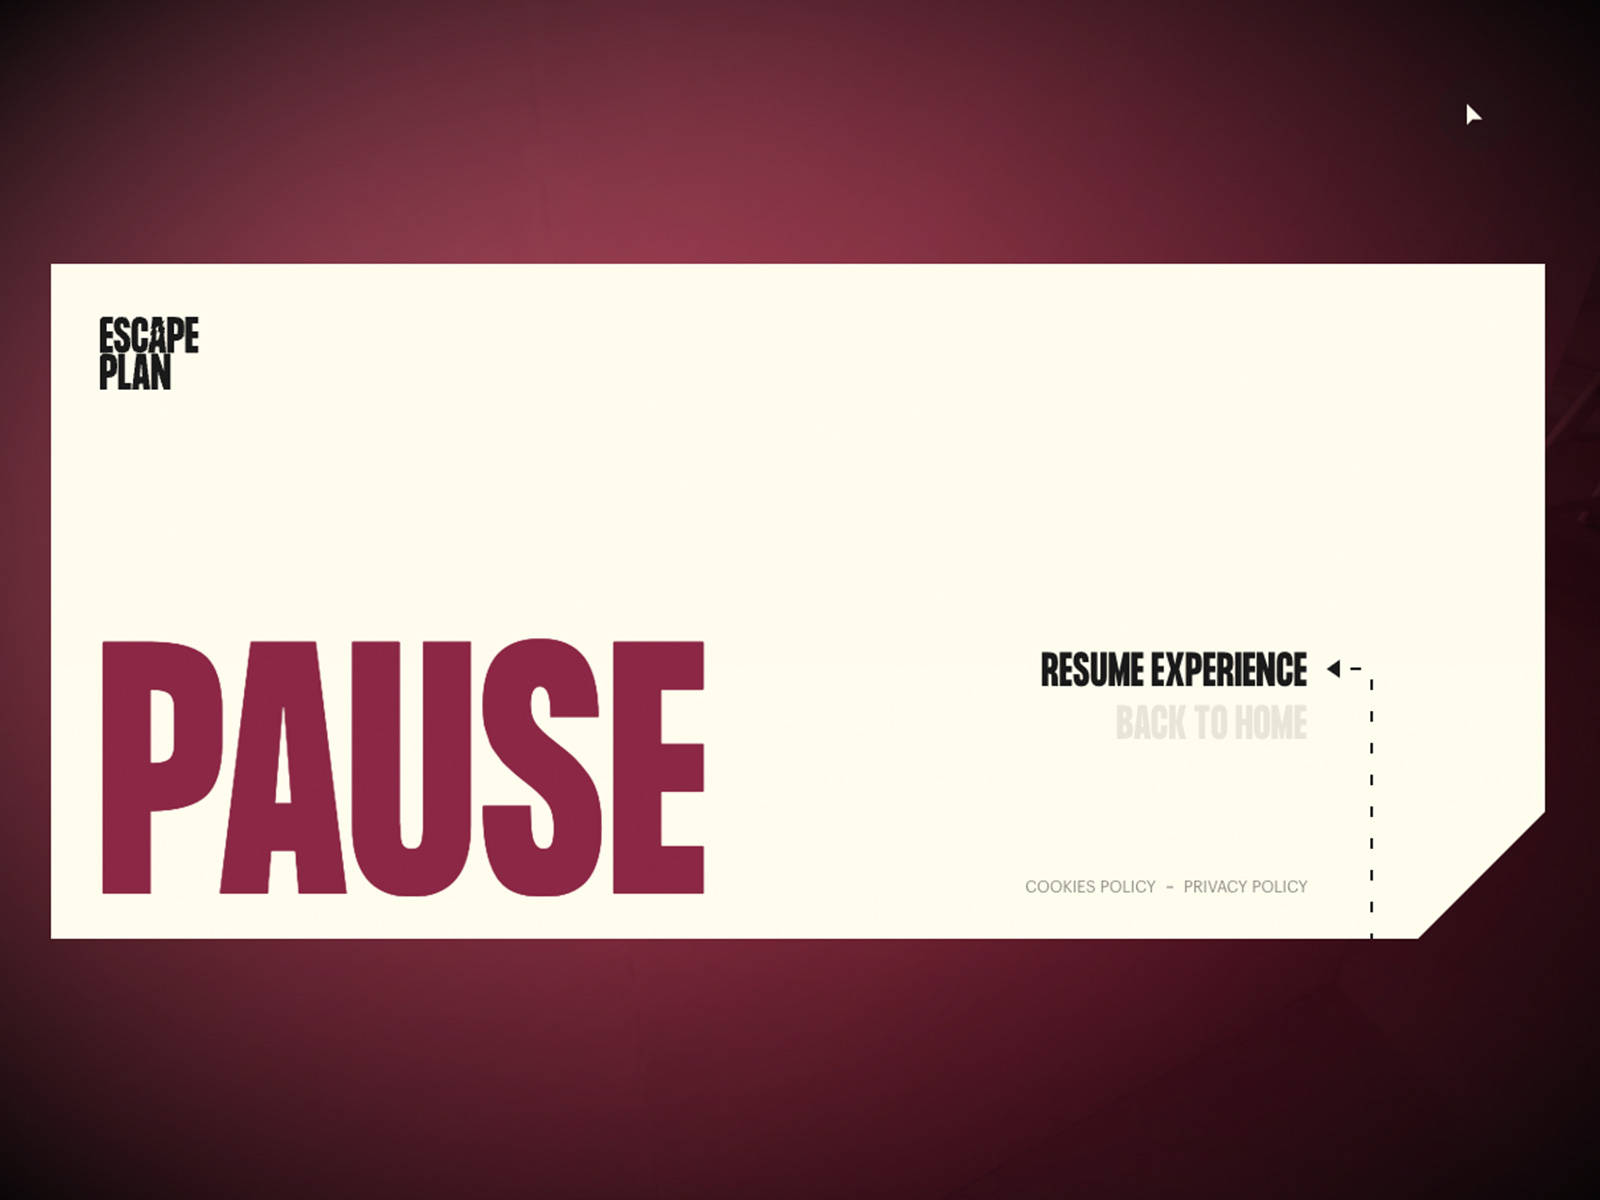 Pause experience